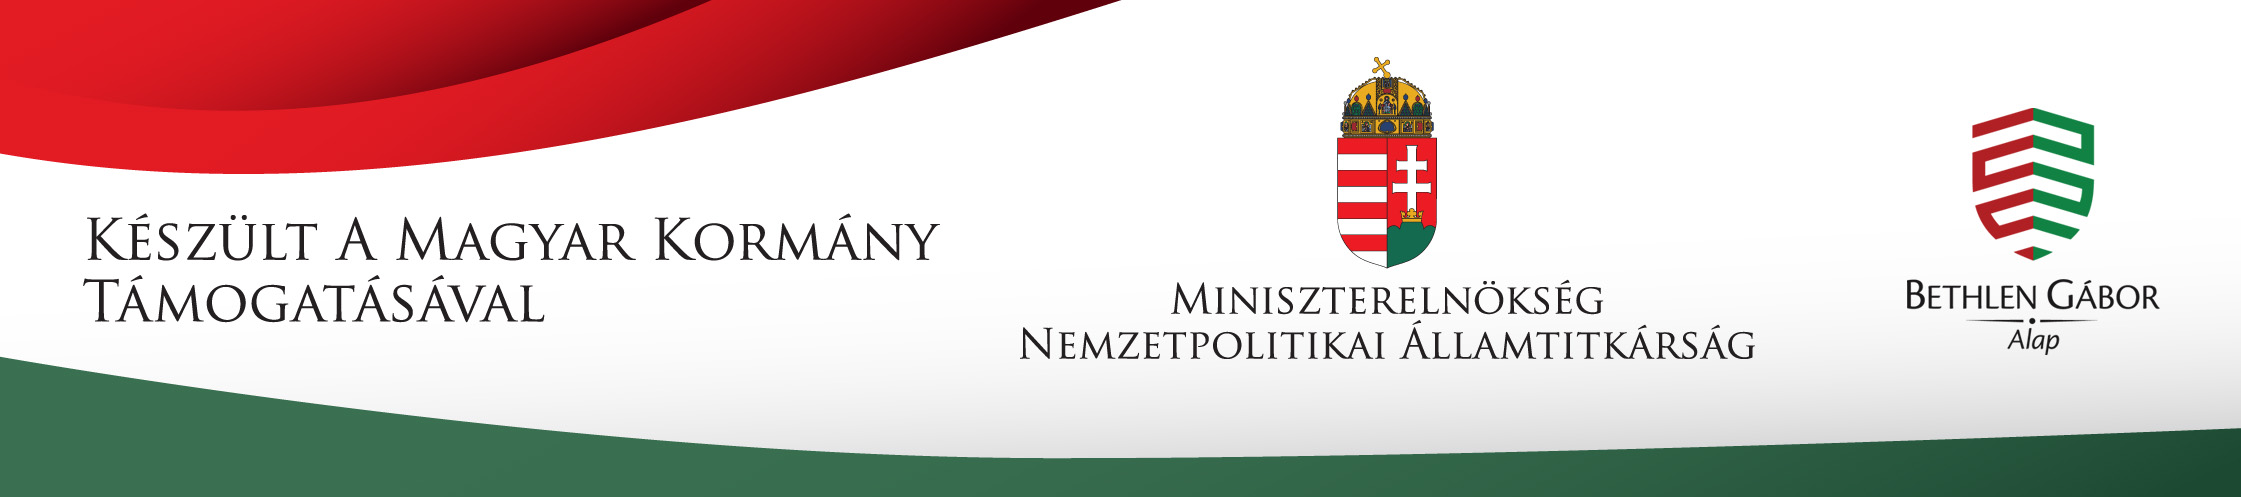 keszult-a-magyar-kormany-tamogatasaval_harmas-logo.jpg